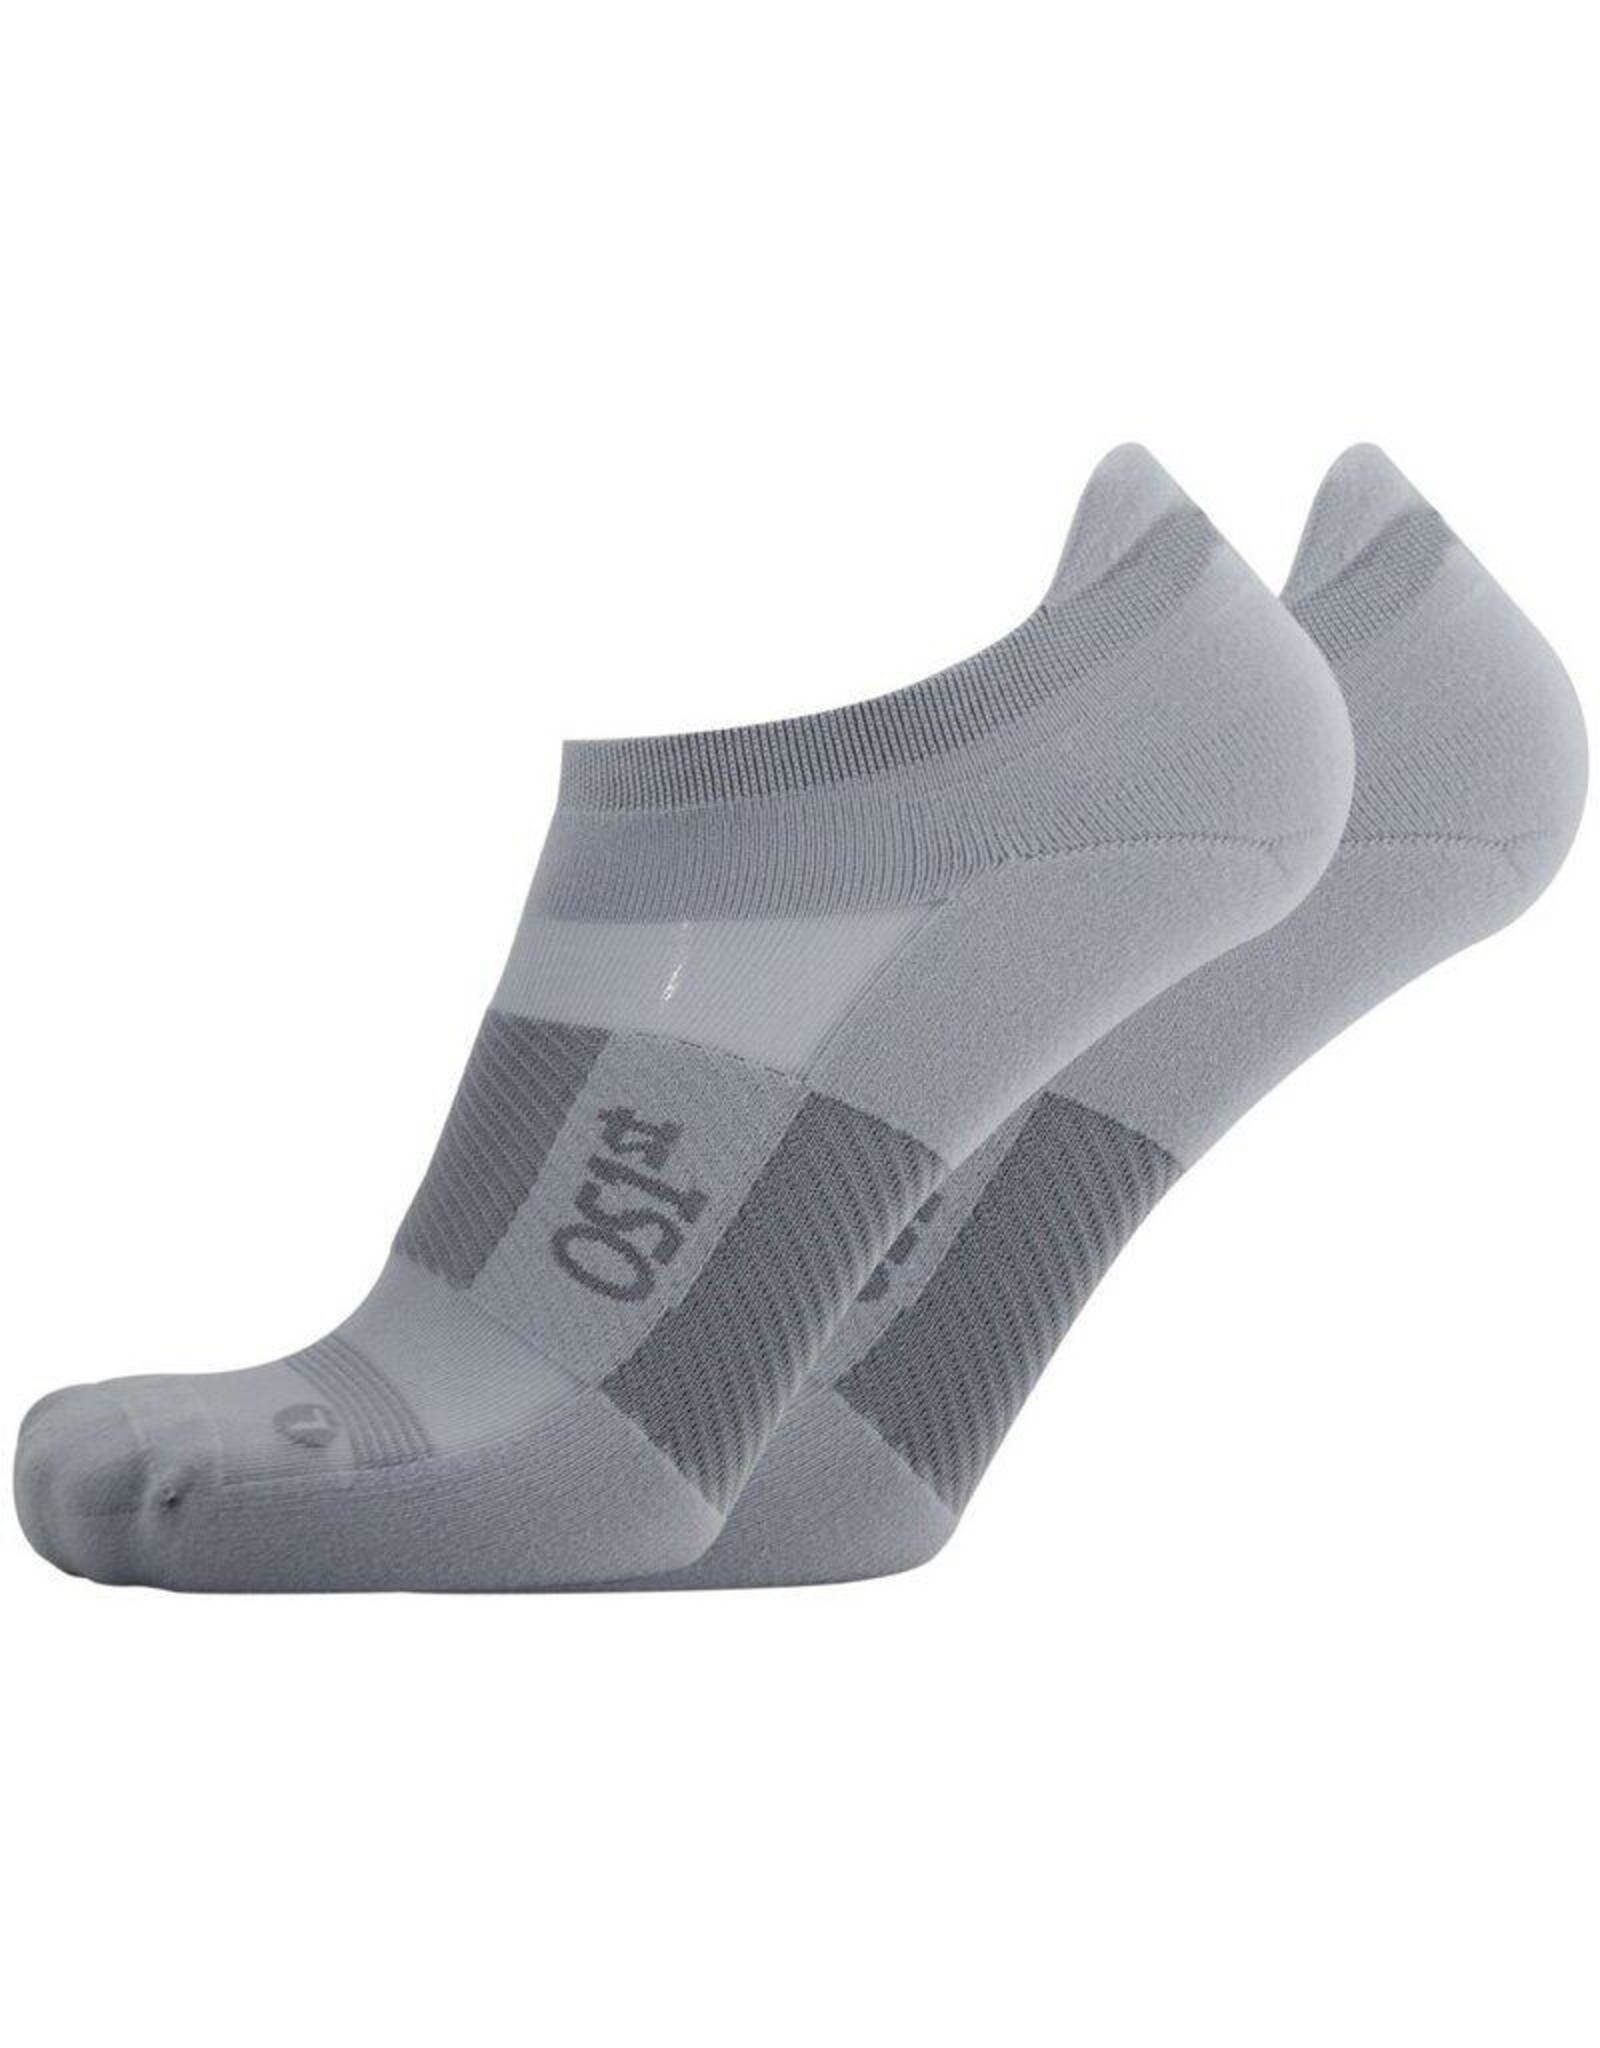 OS1ST Thin Air Performance Socks